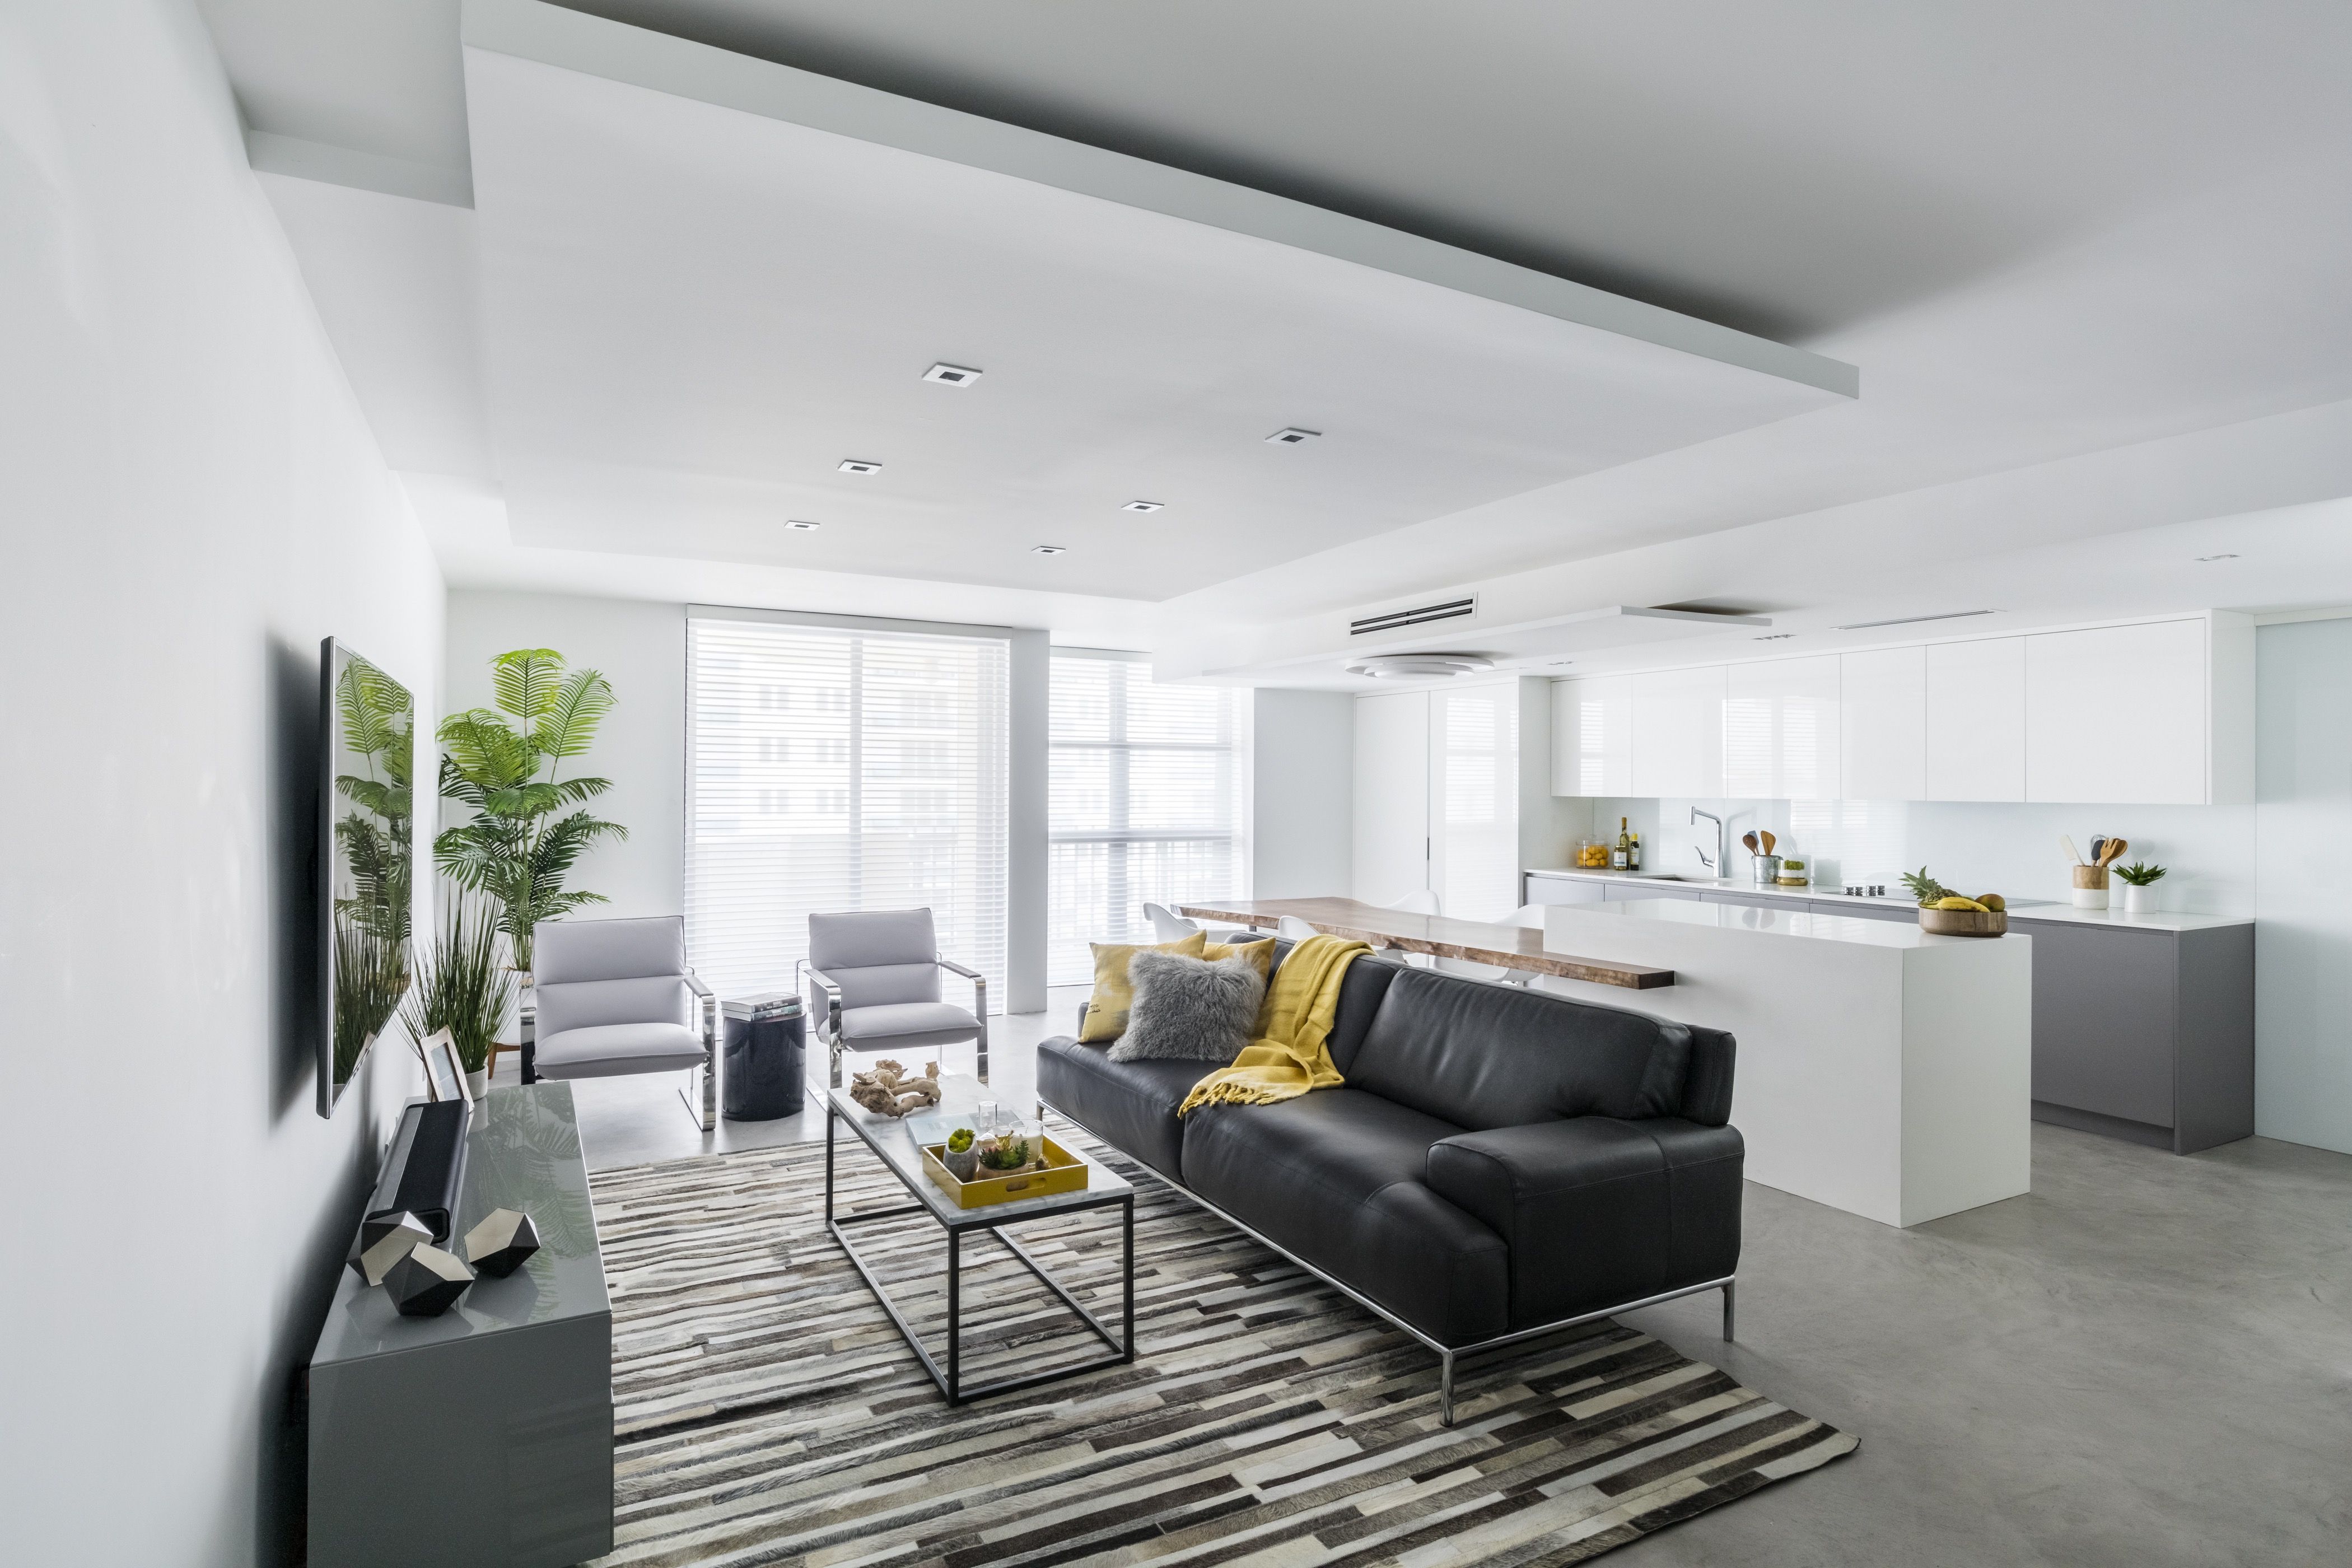 20 Best Minimalist Living Room Design And Decor Ideas ...